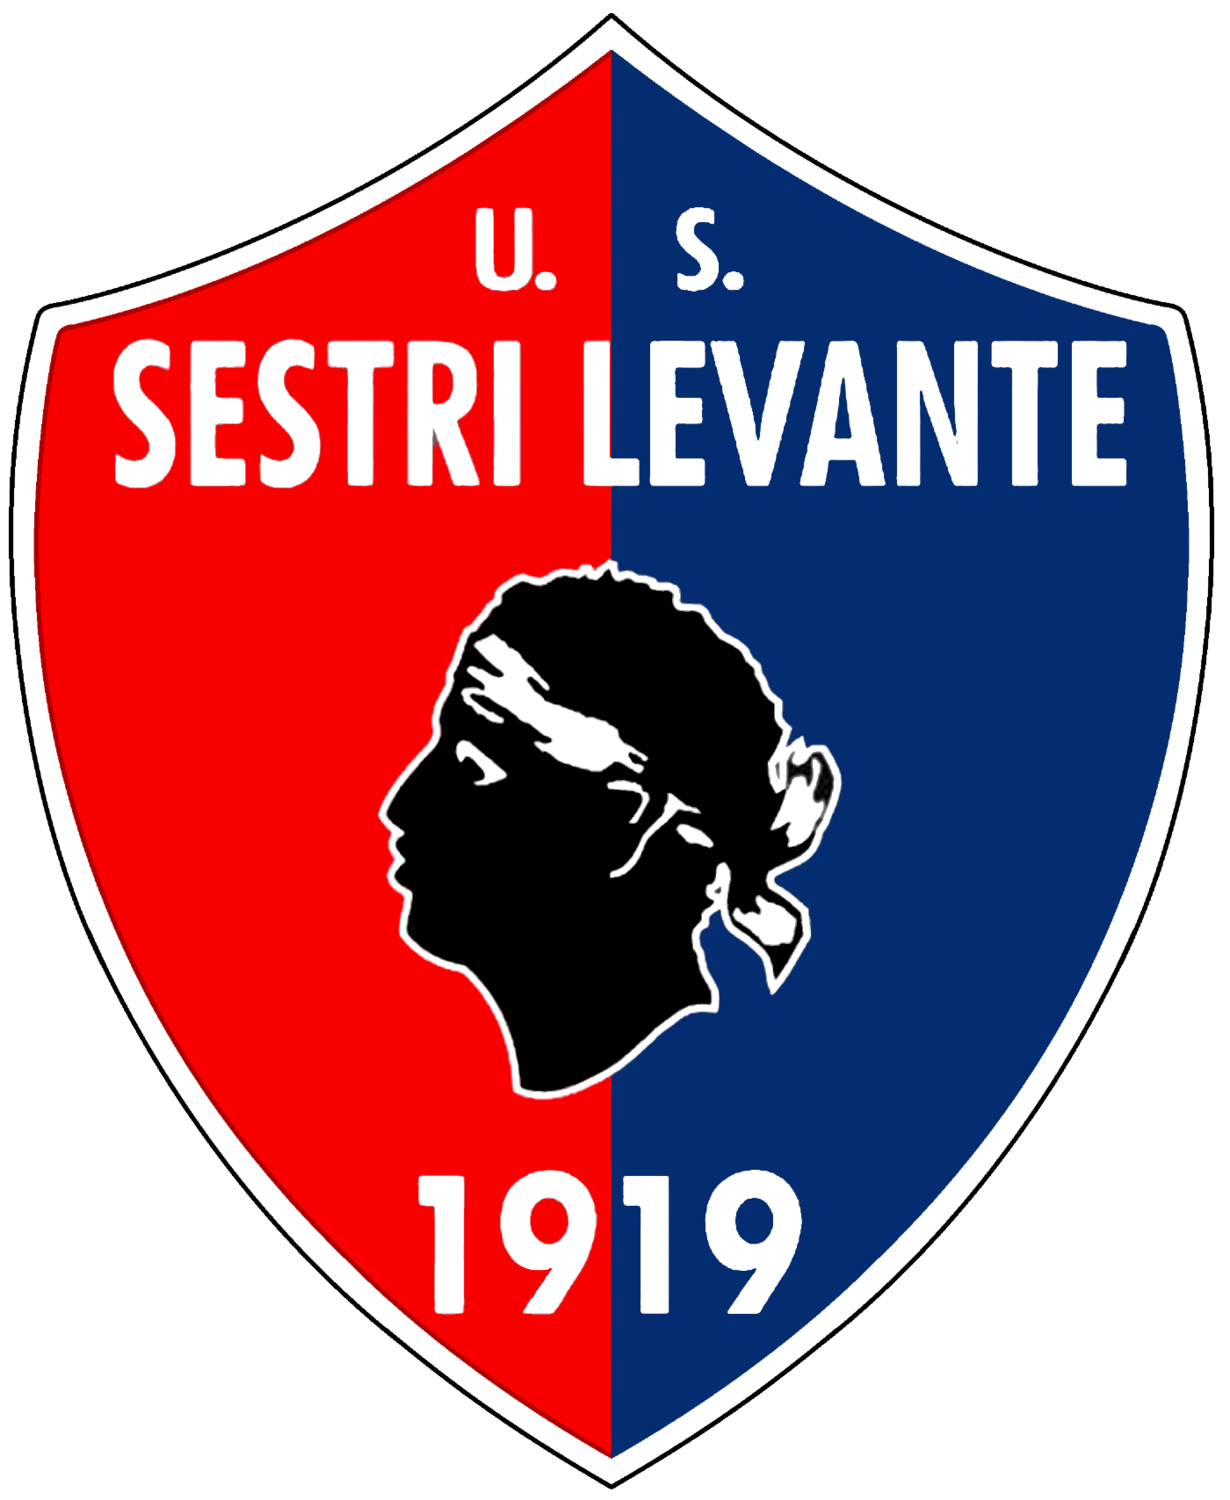 S.Levante